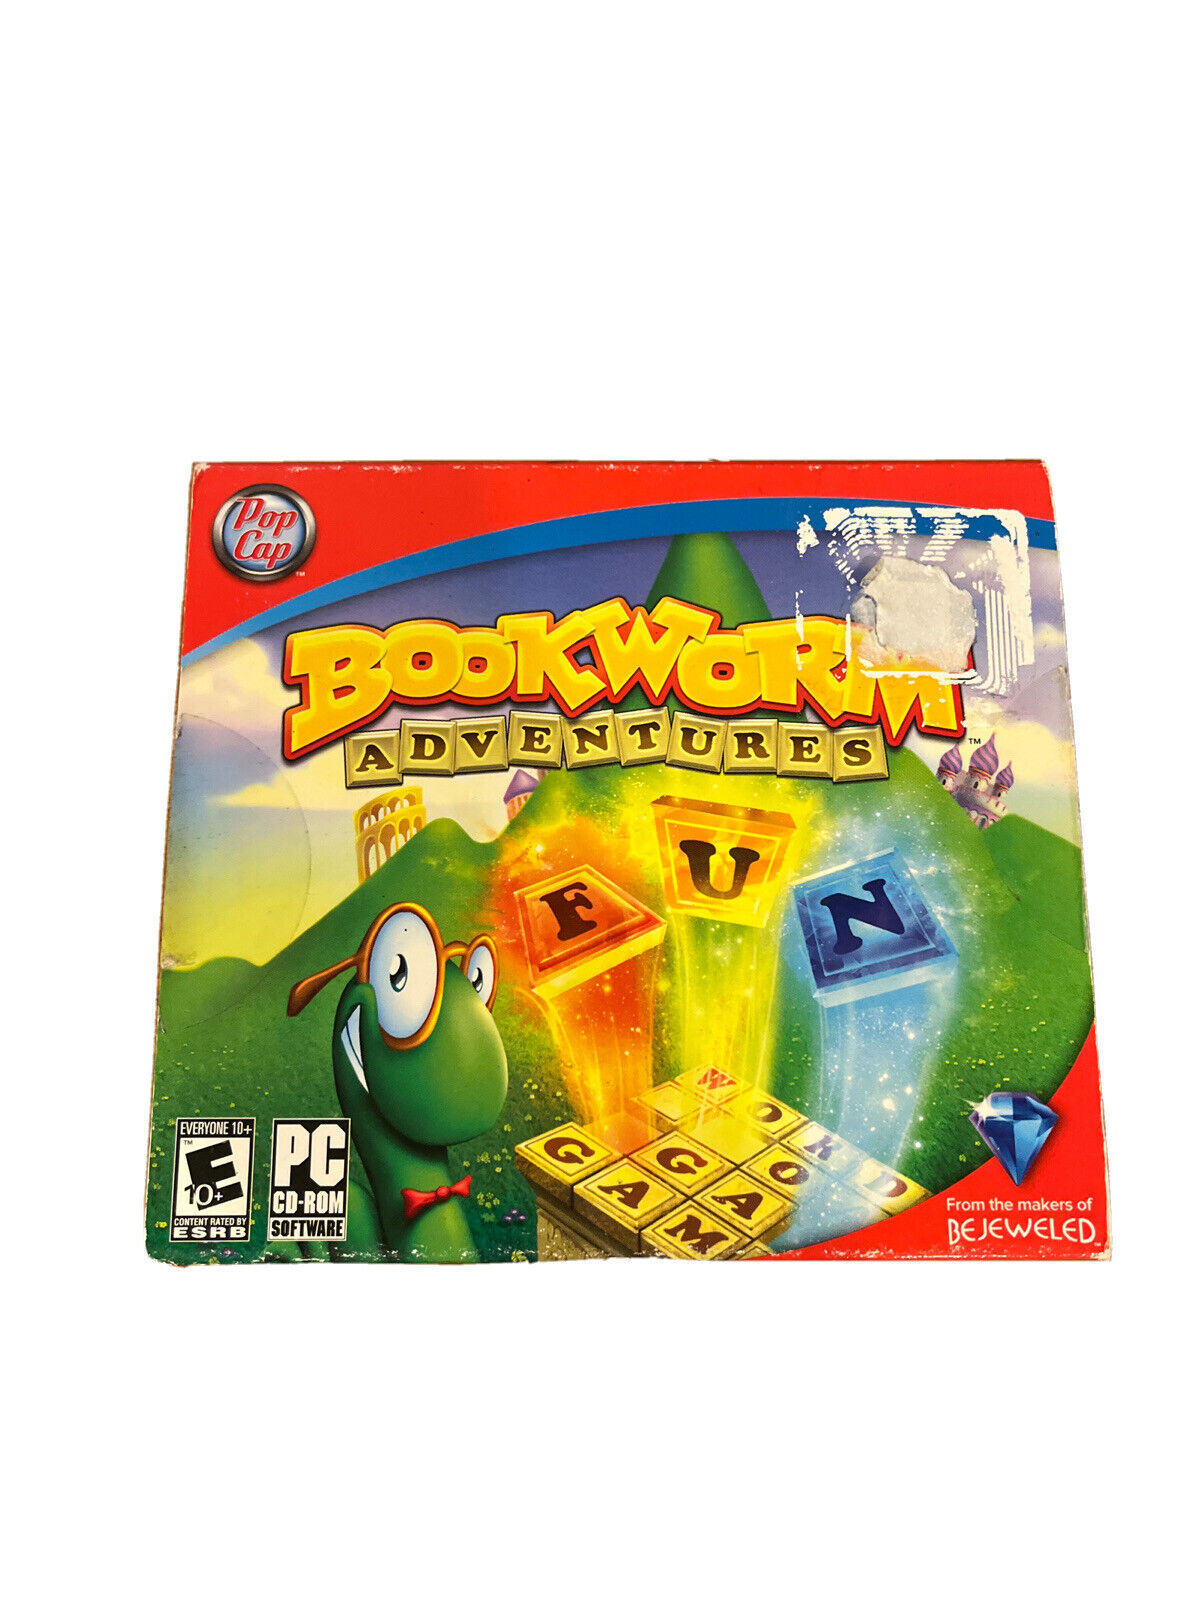 Bookworm Adventures PC Game 2006 PopCap Games, Inc. Rated E 10+